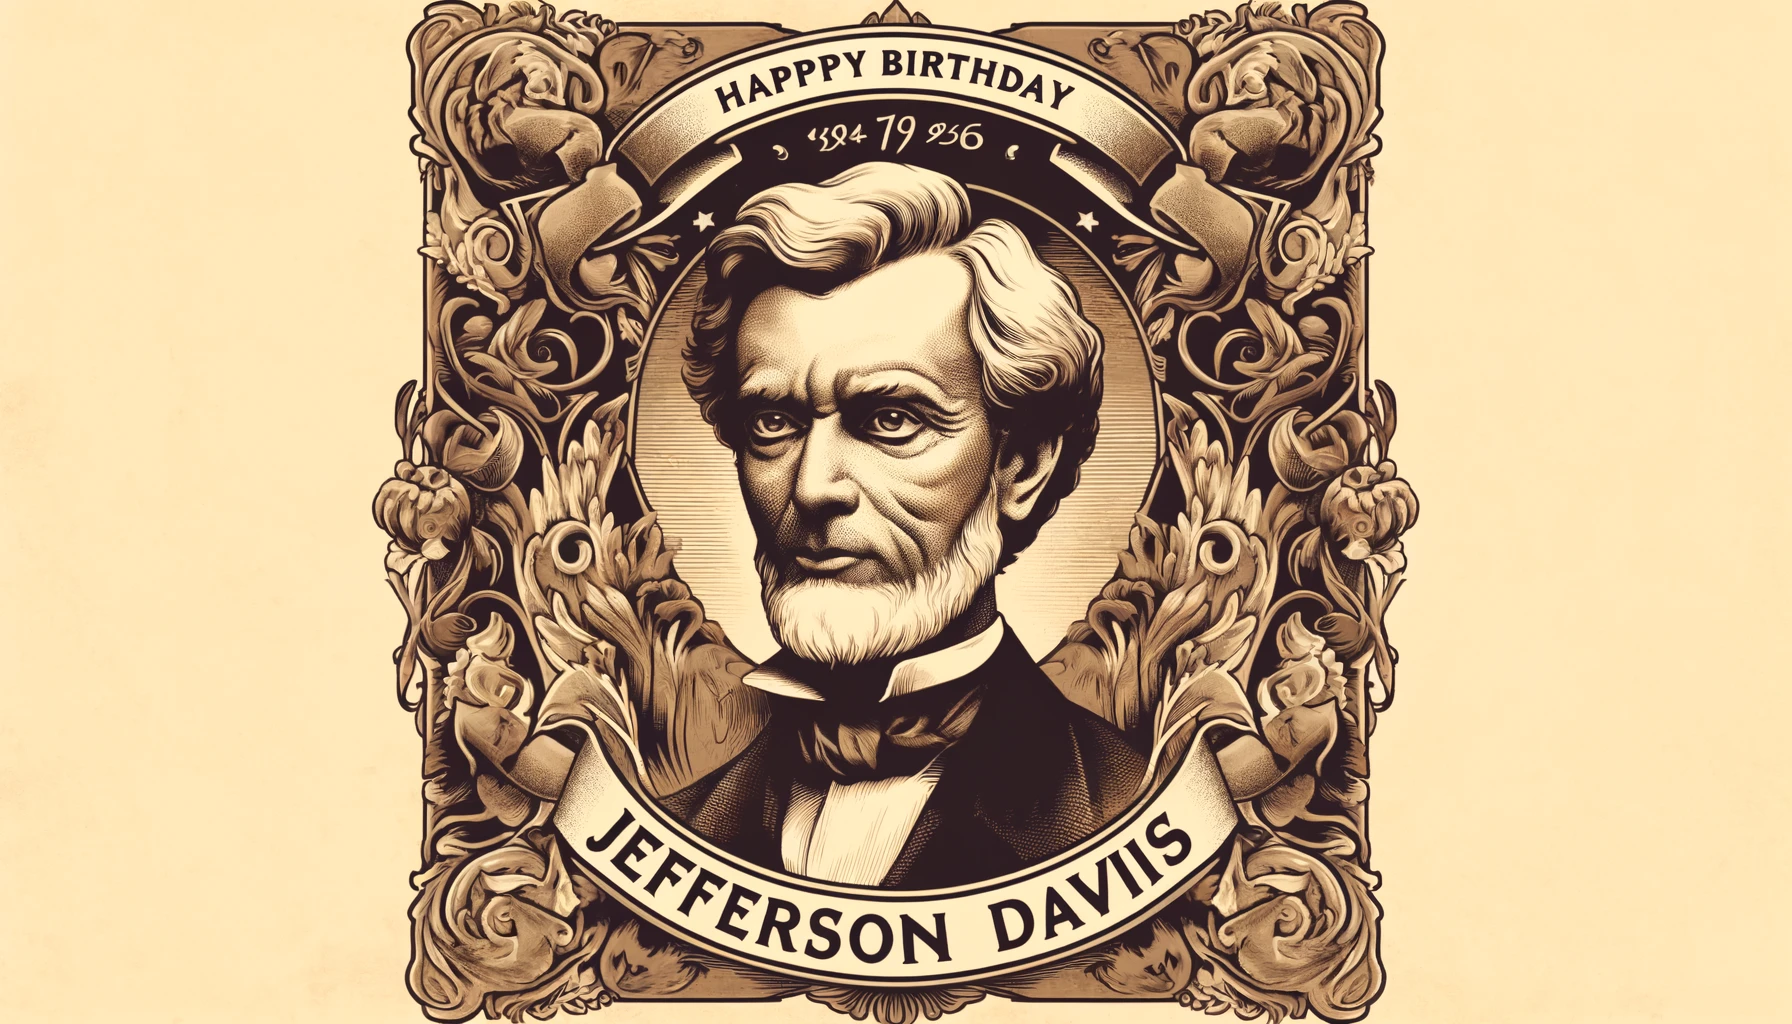 Commemorative Greetings for Jefferson Davis’ Birthday